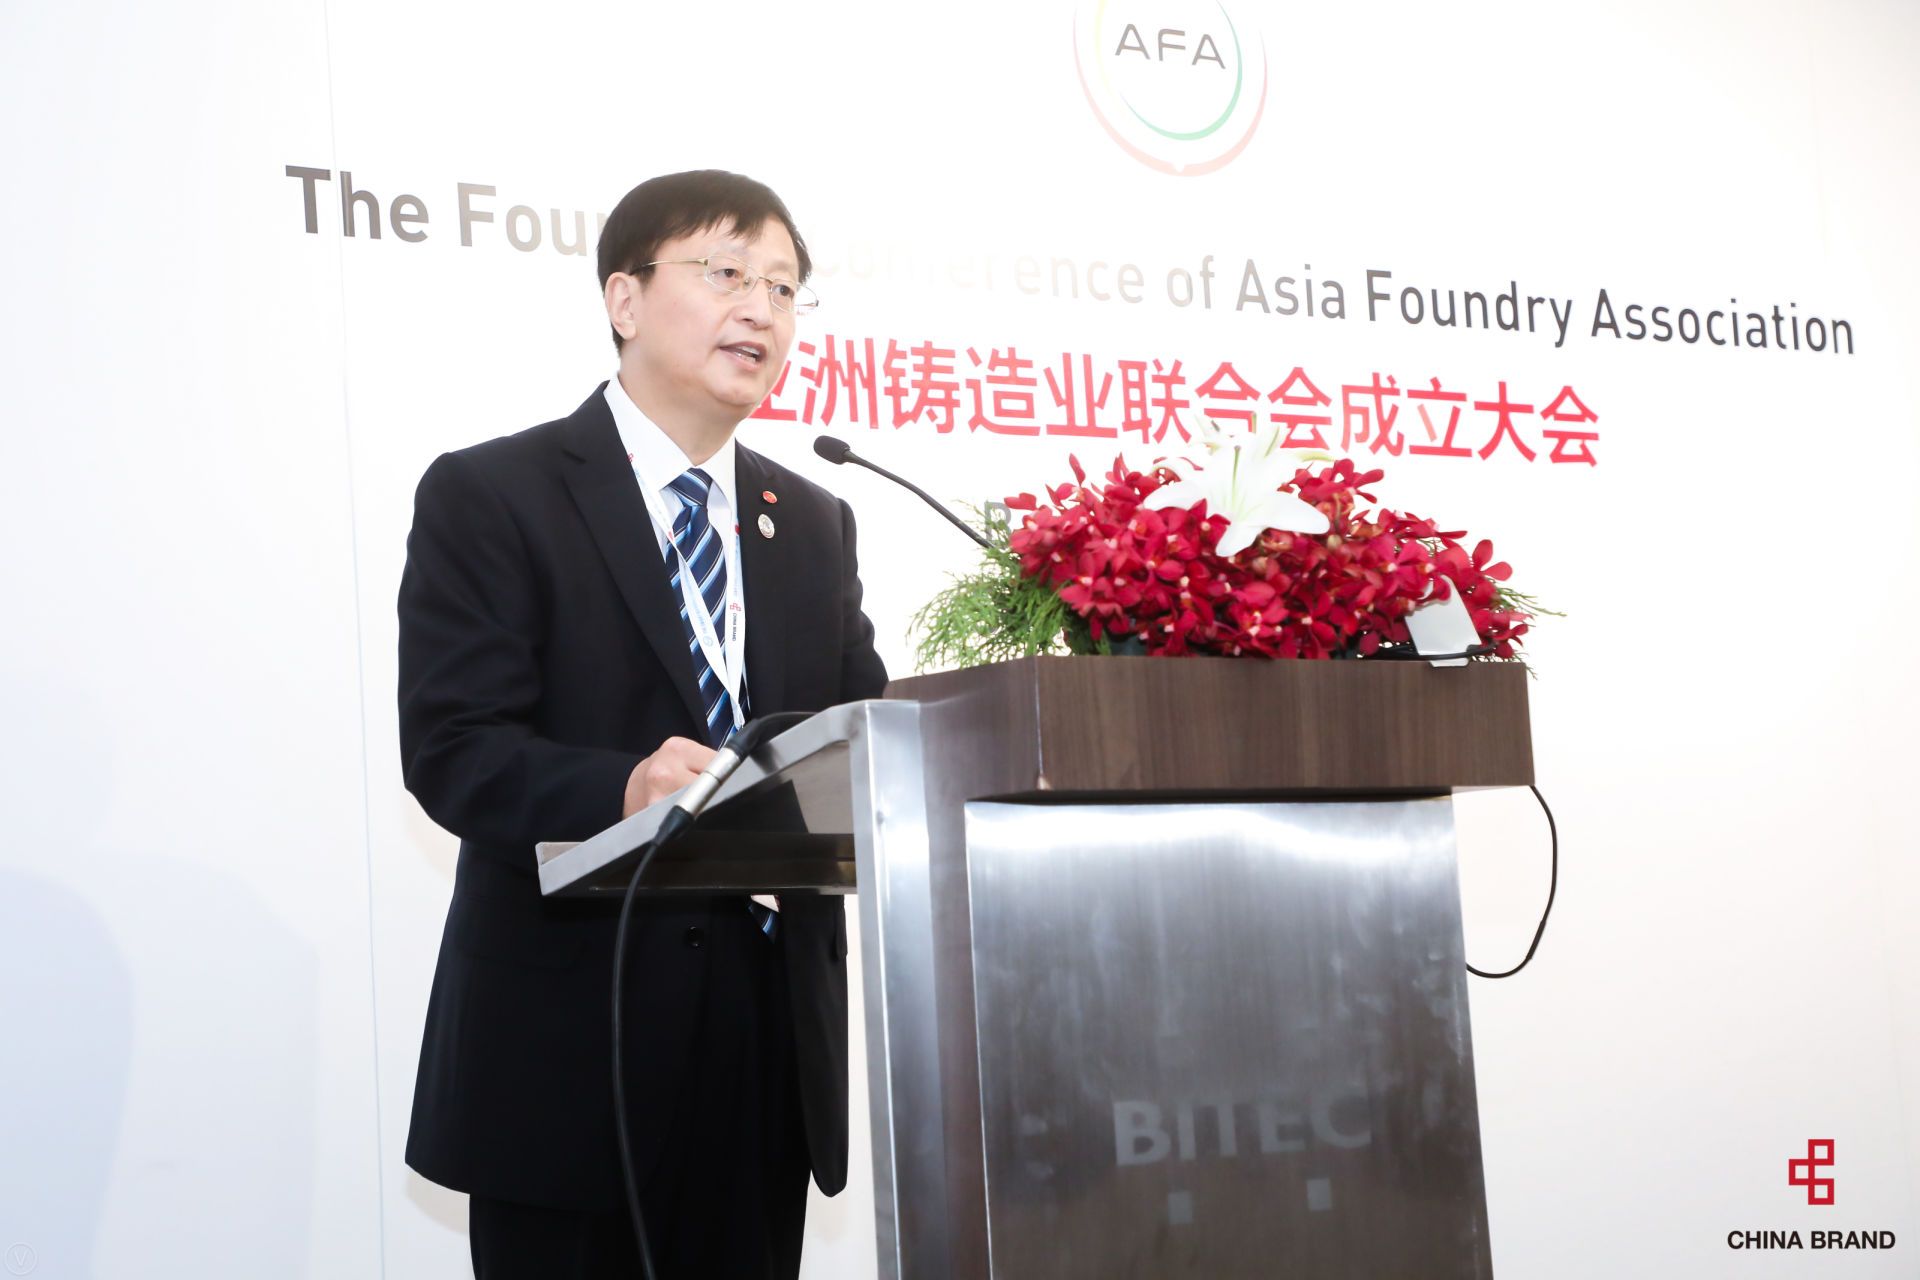 Asia Foundry Association Formally Established